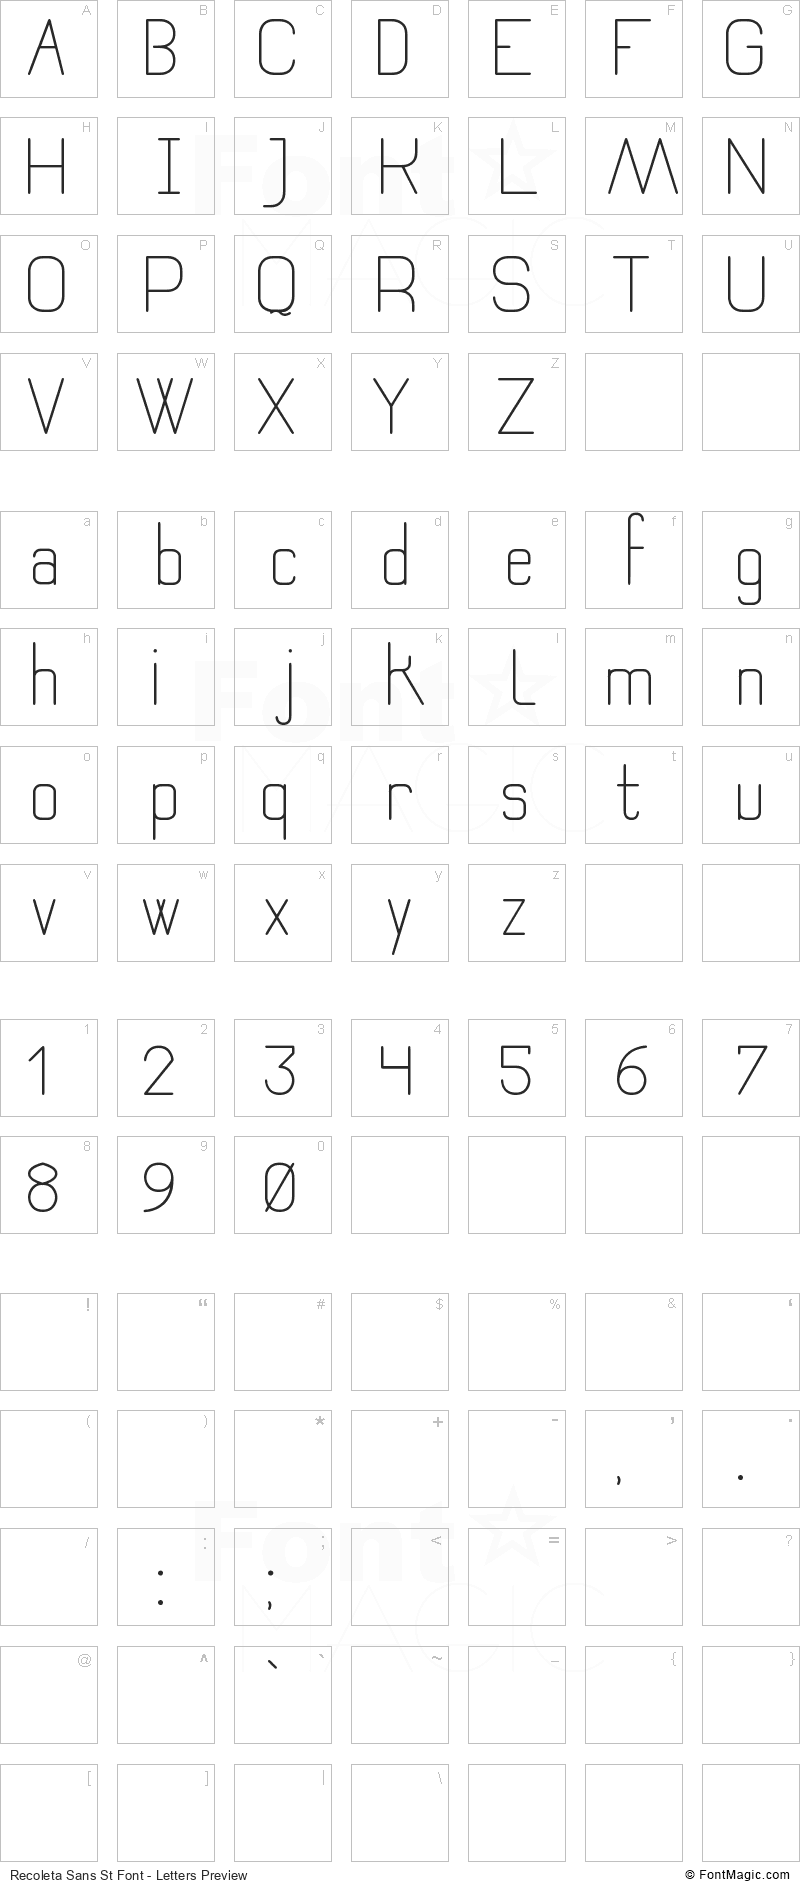 Recoleta Sans St Font - All Latters Preview Chart